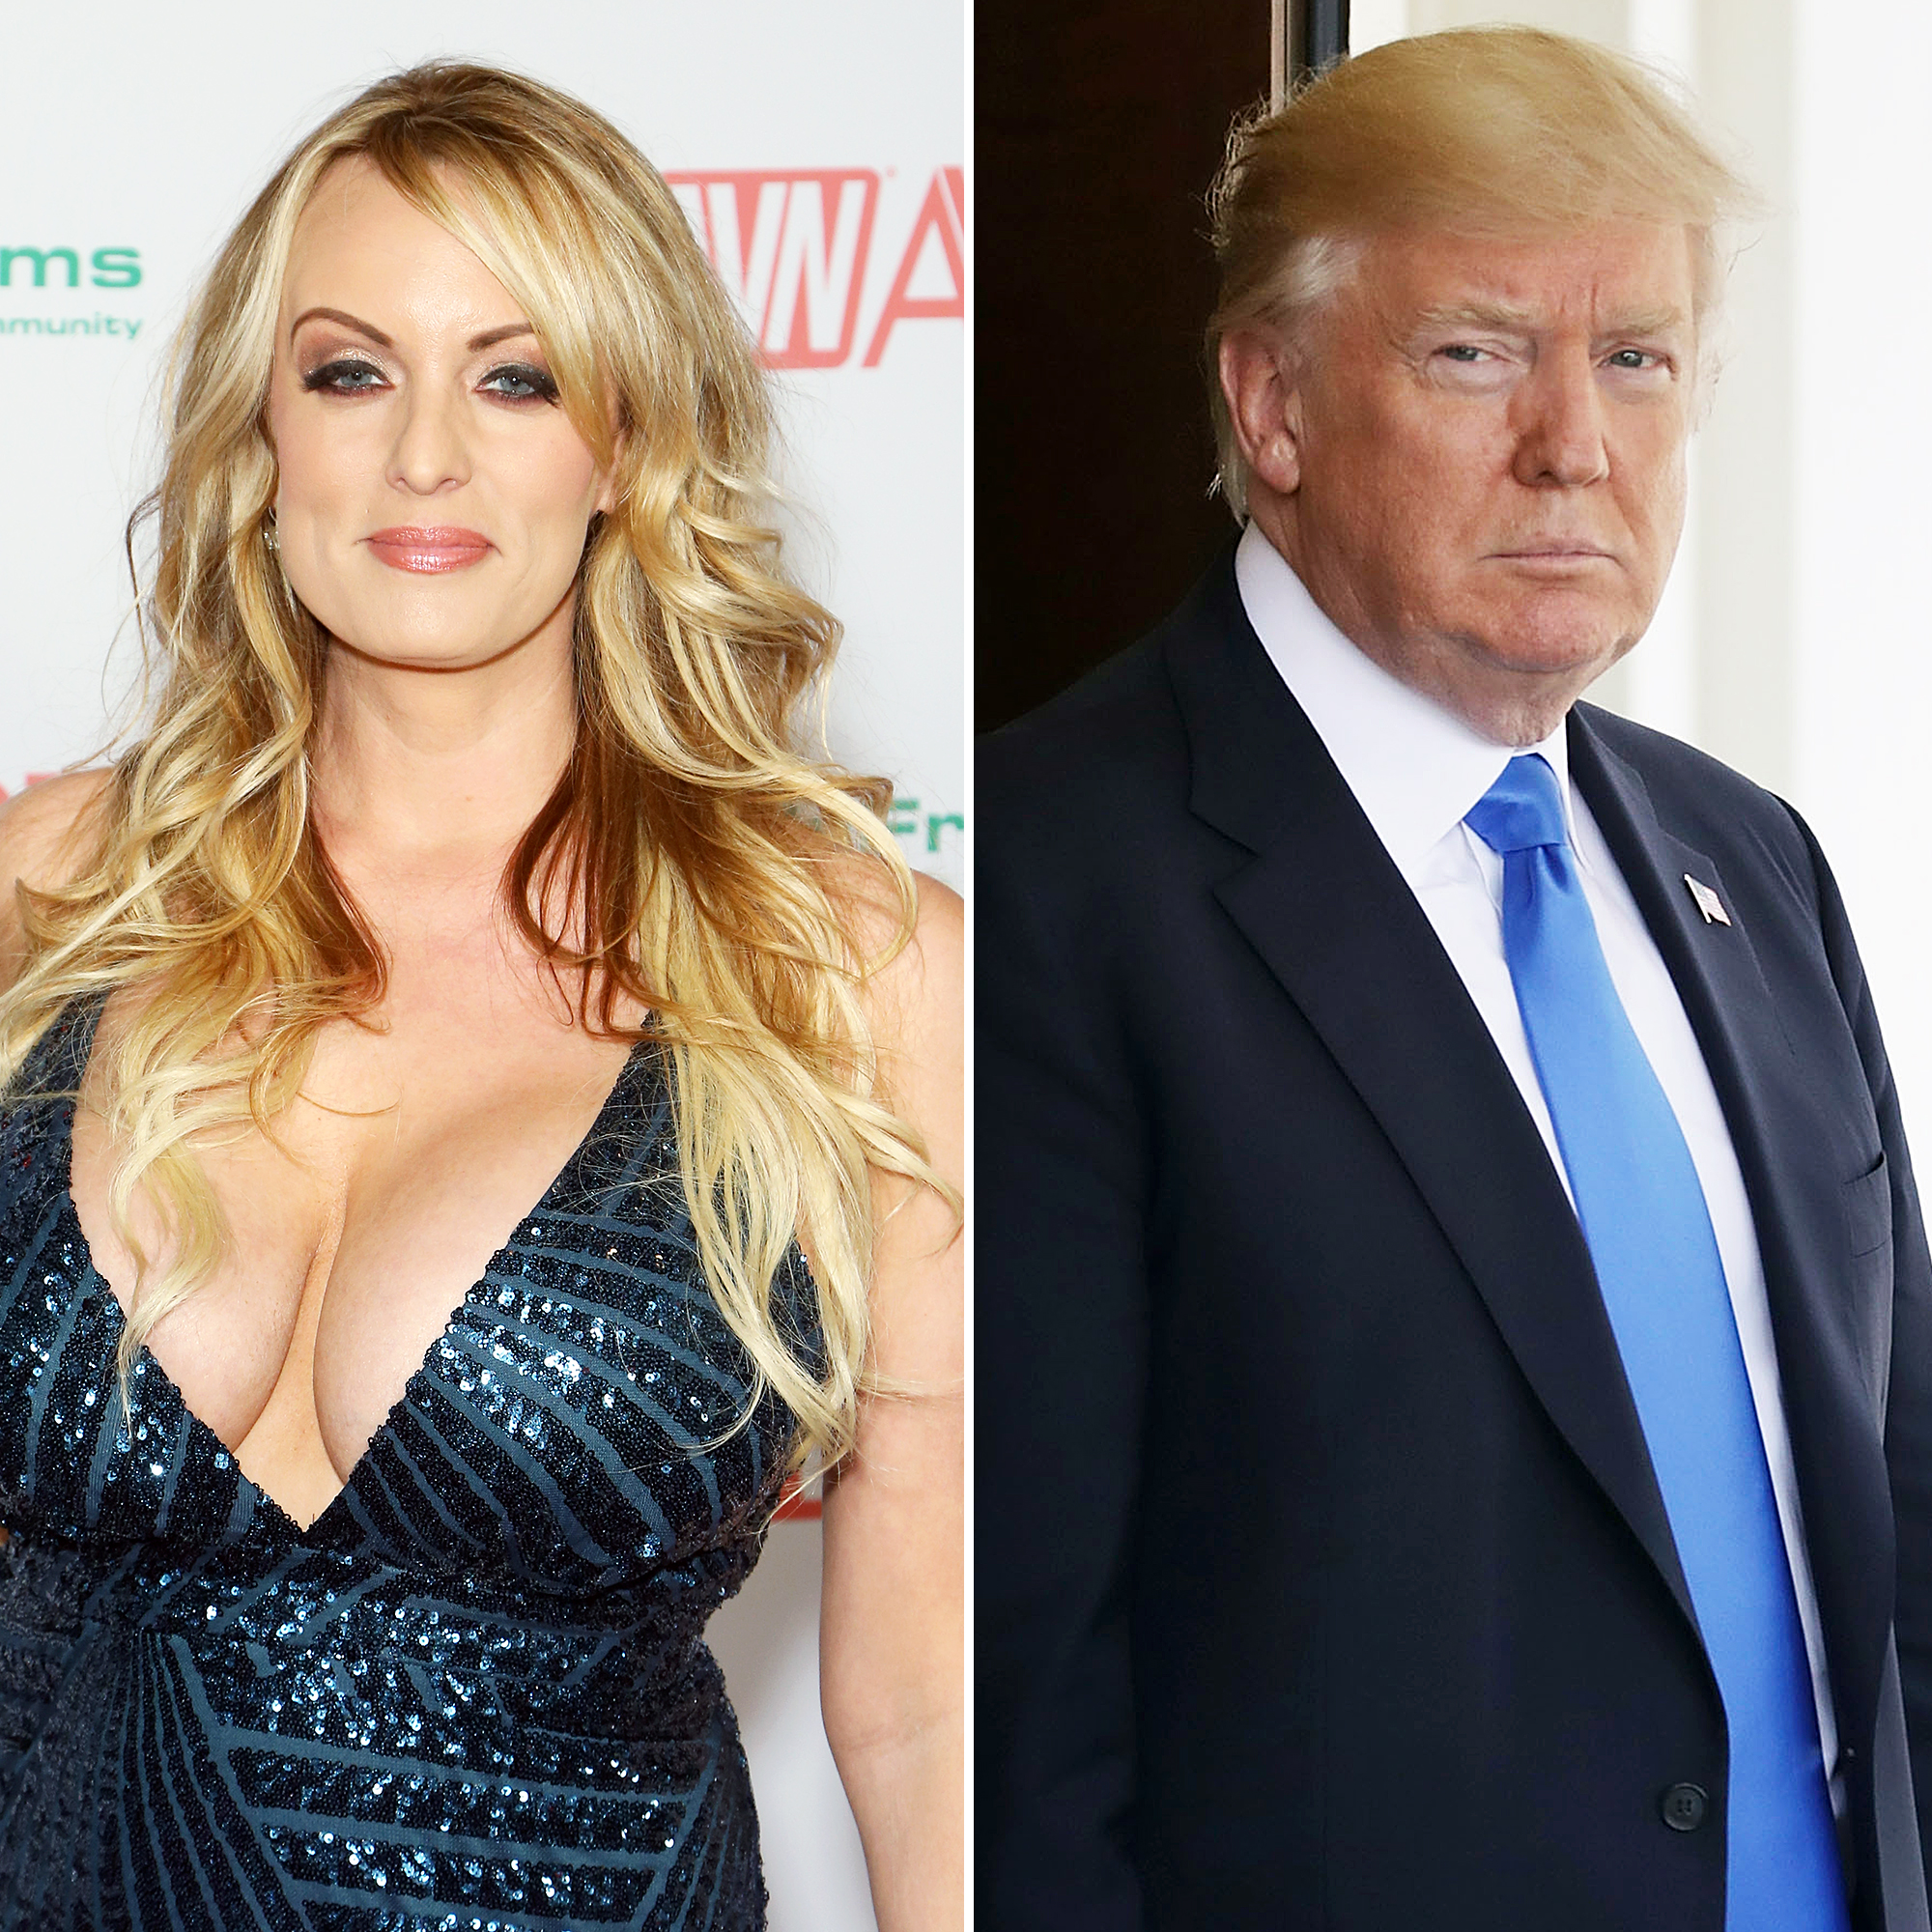 Porn Star Stormy Daniels Denies Donald Trump Affair